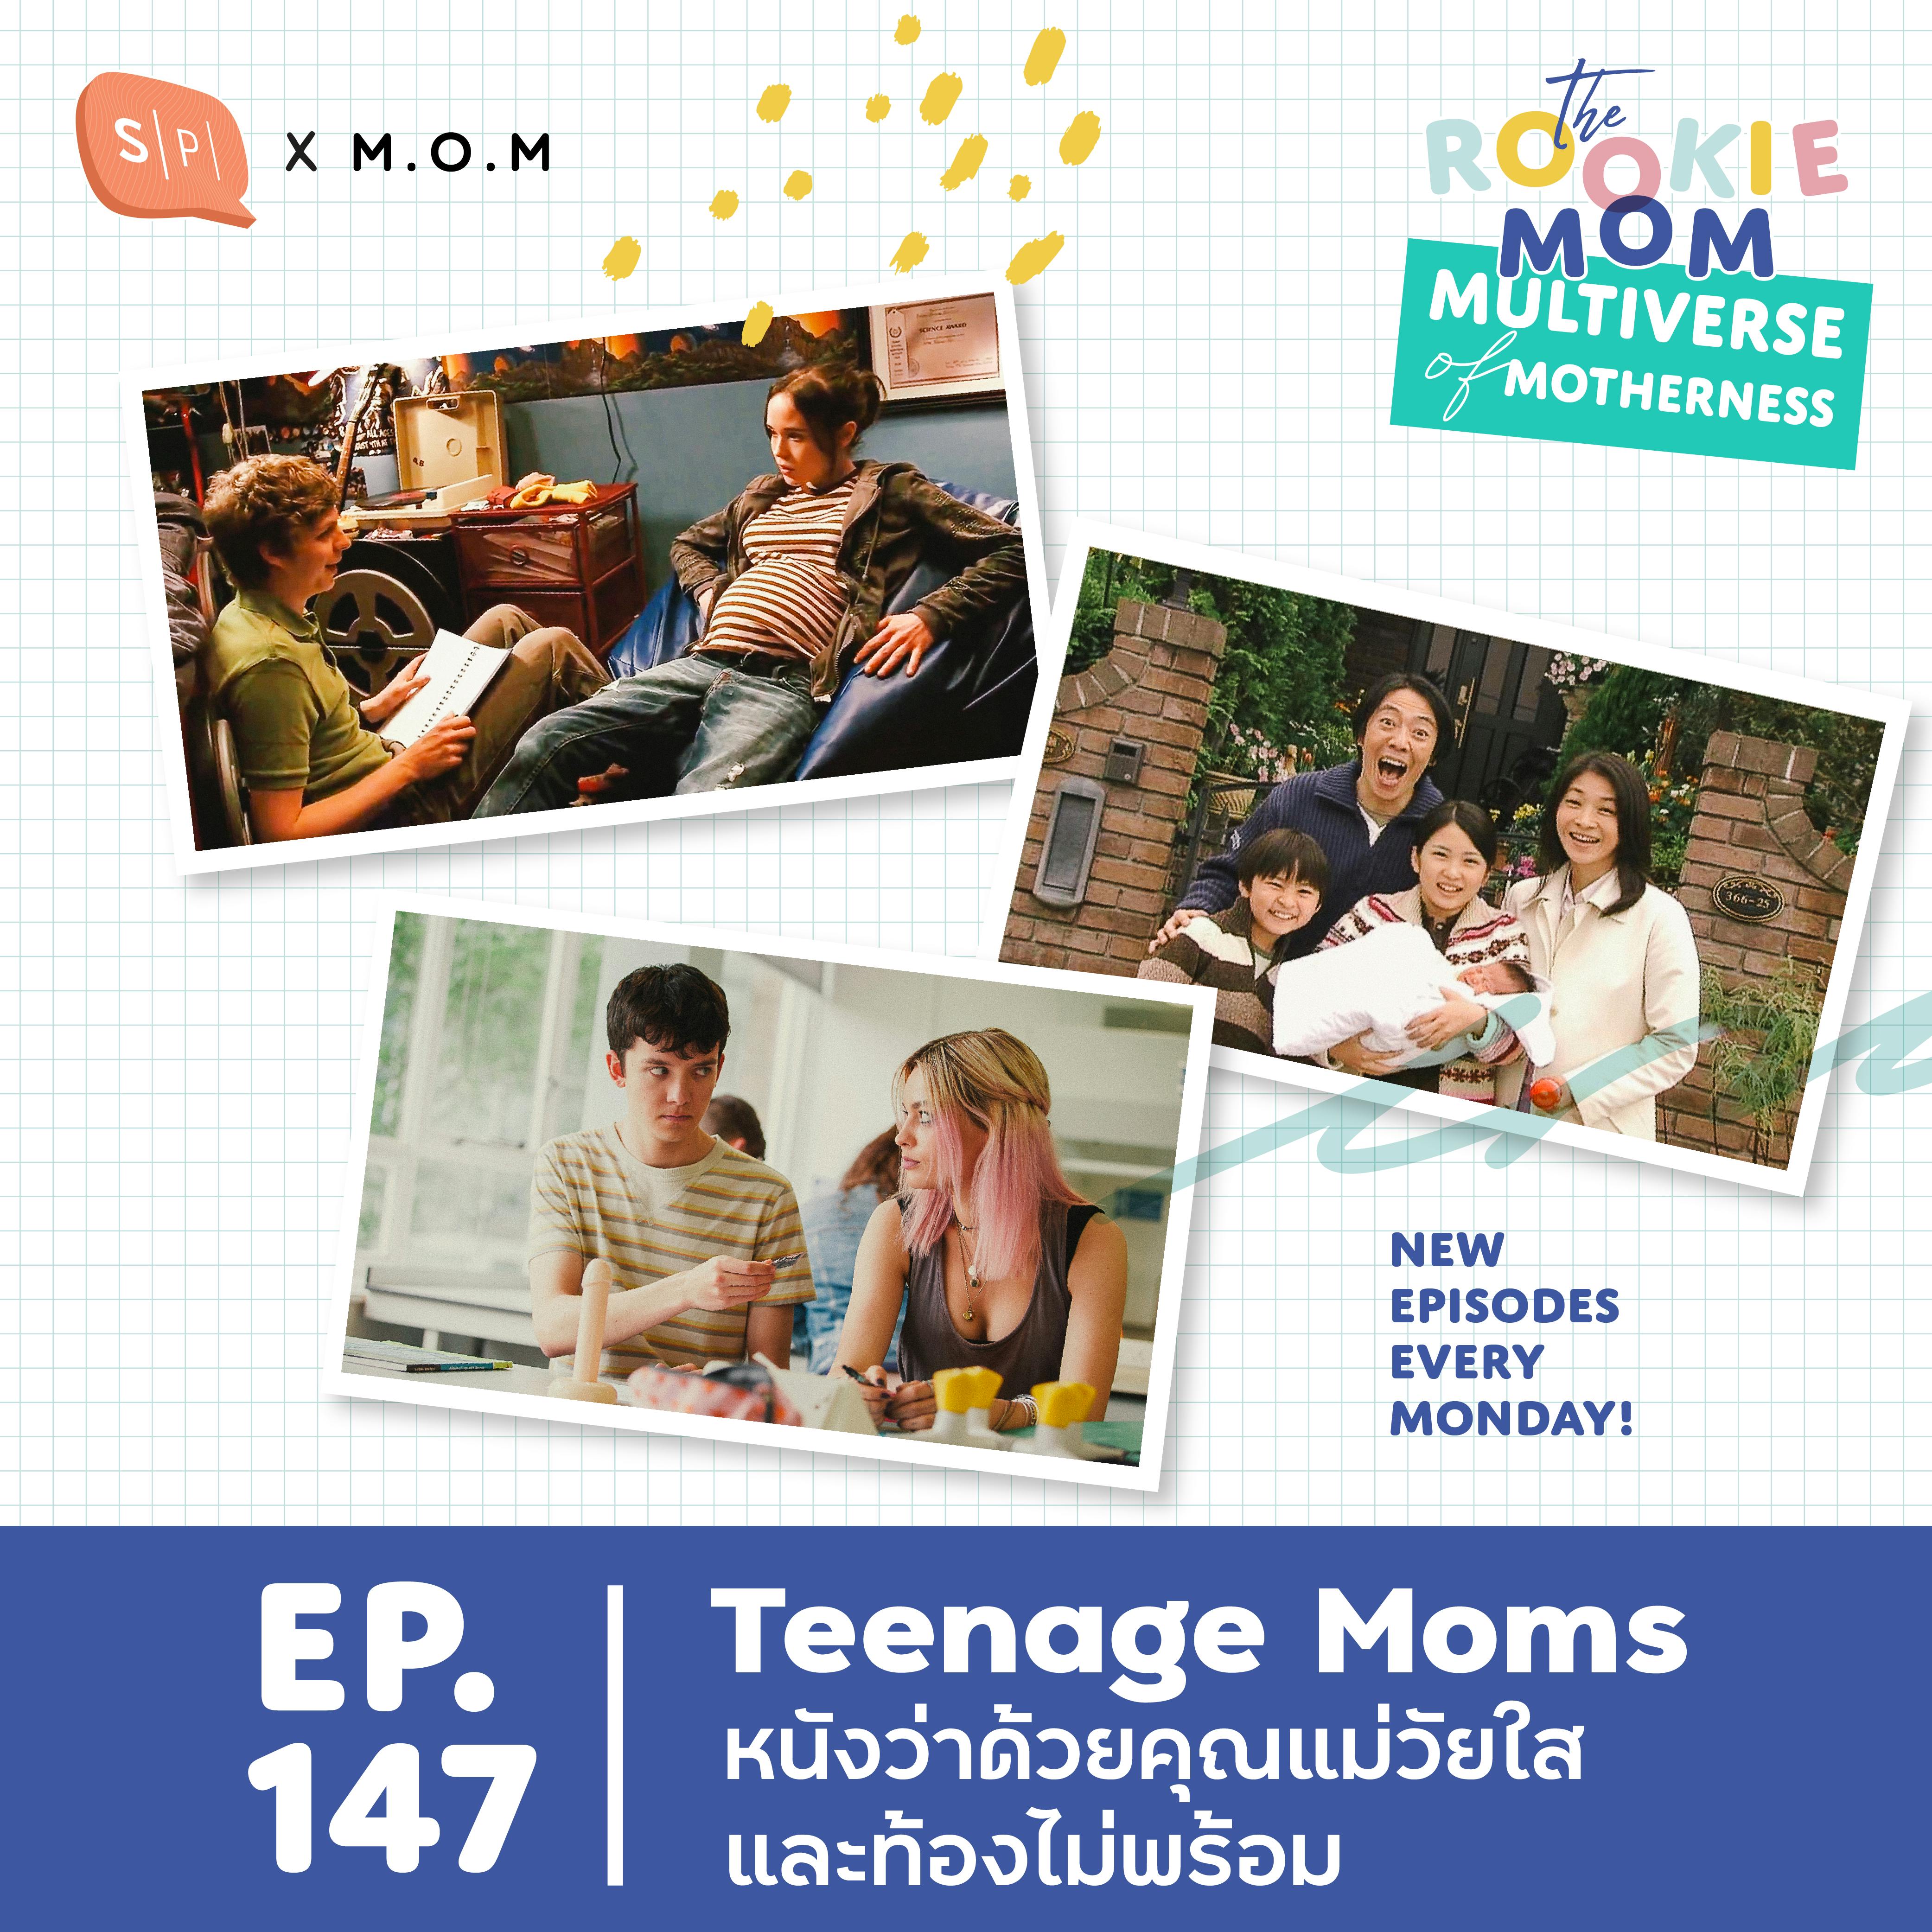 Teenage Moms หนังว่าด้วยคุณแม่วัยใสและท้องไม่พร้อม | EP147